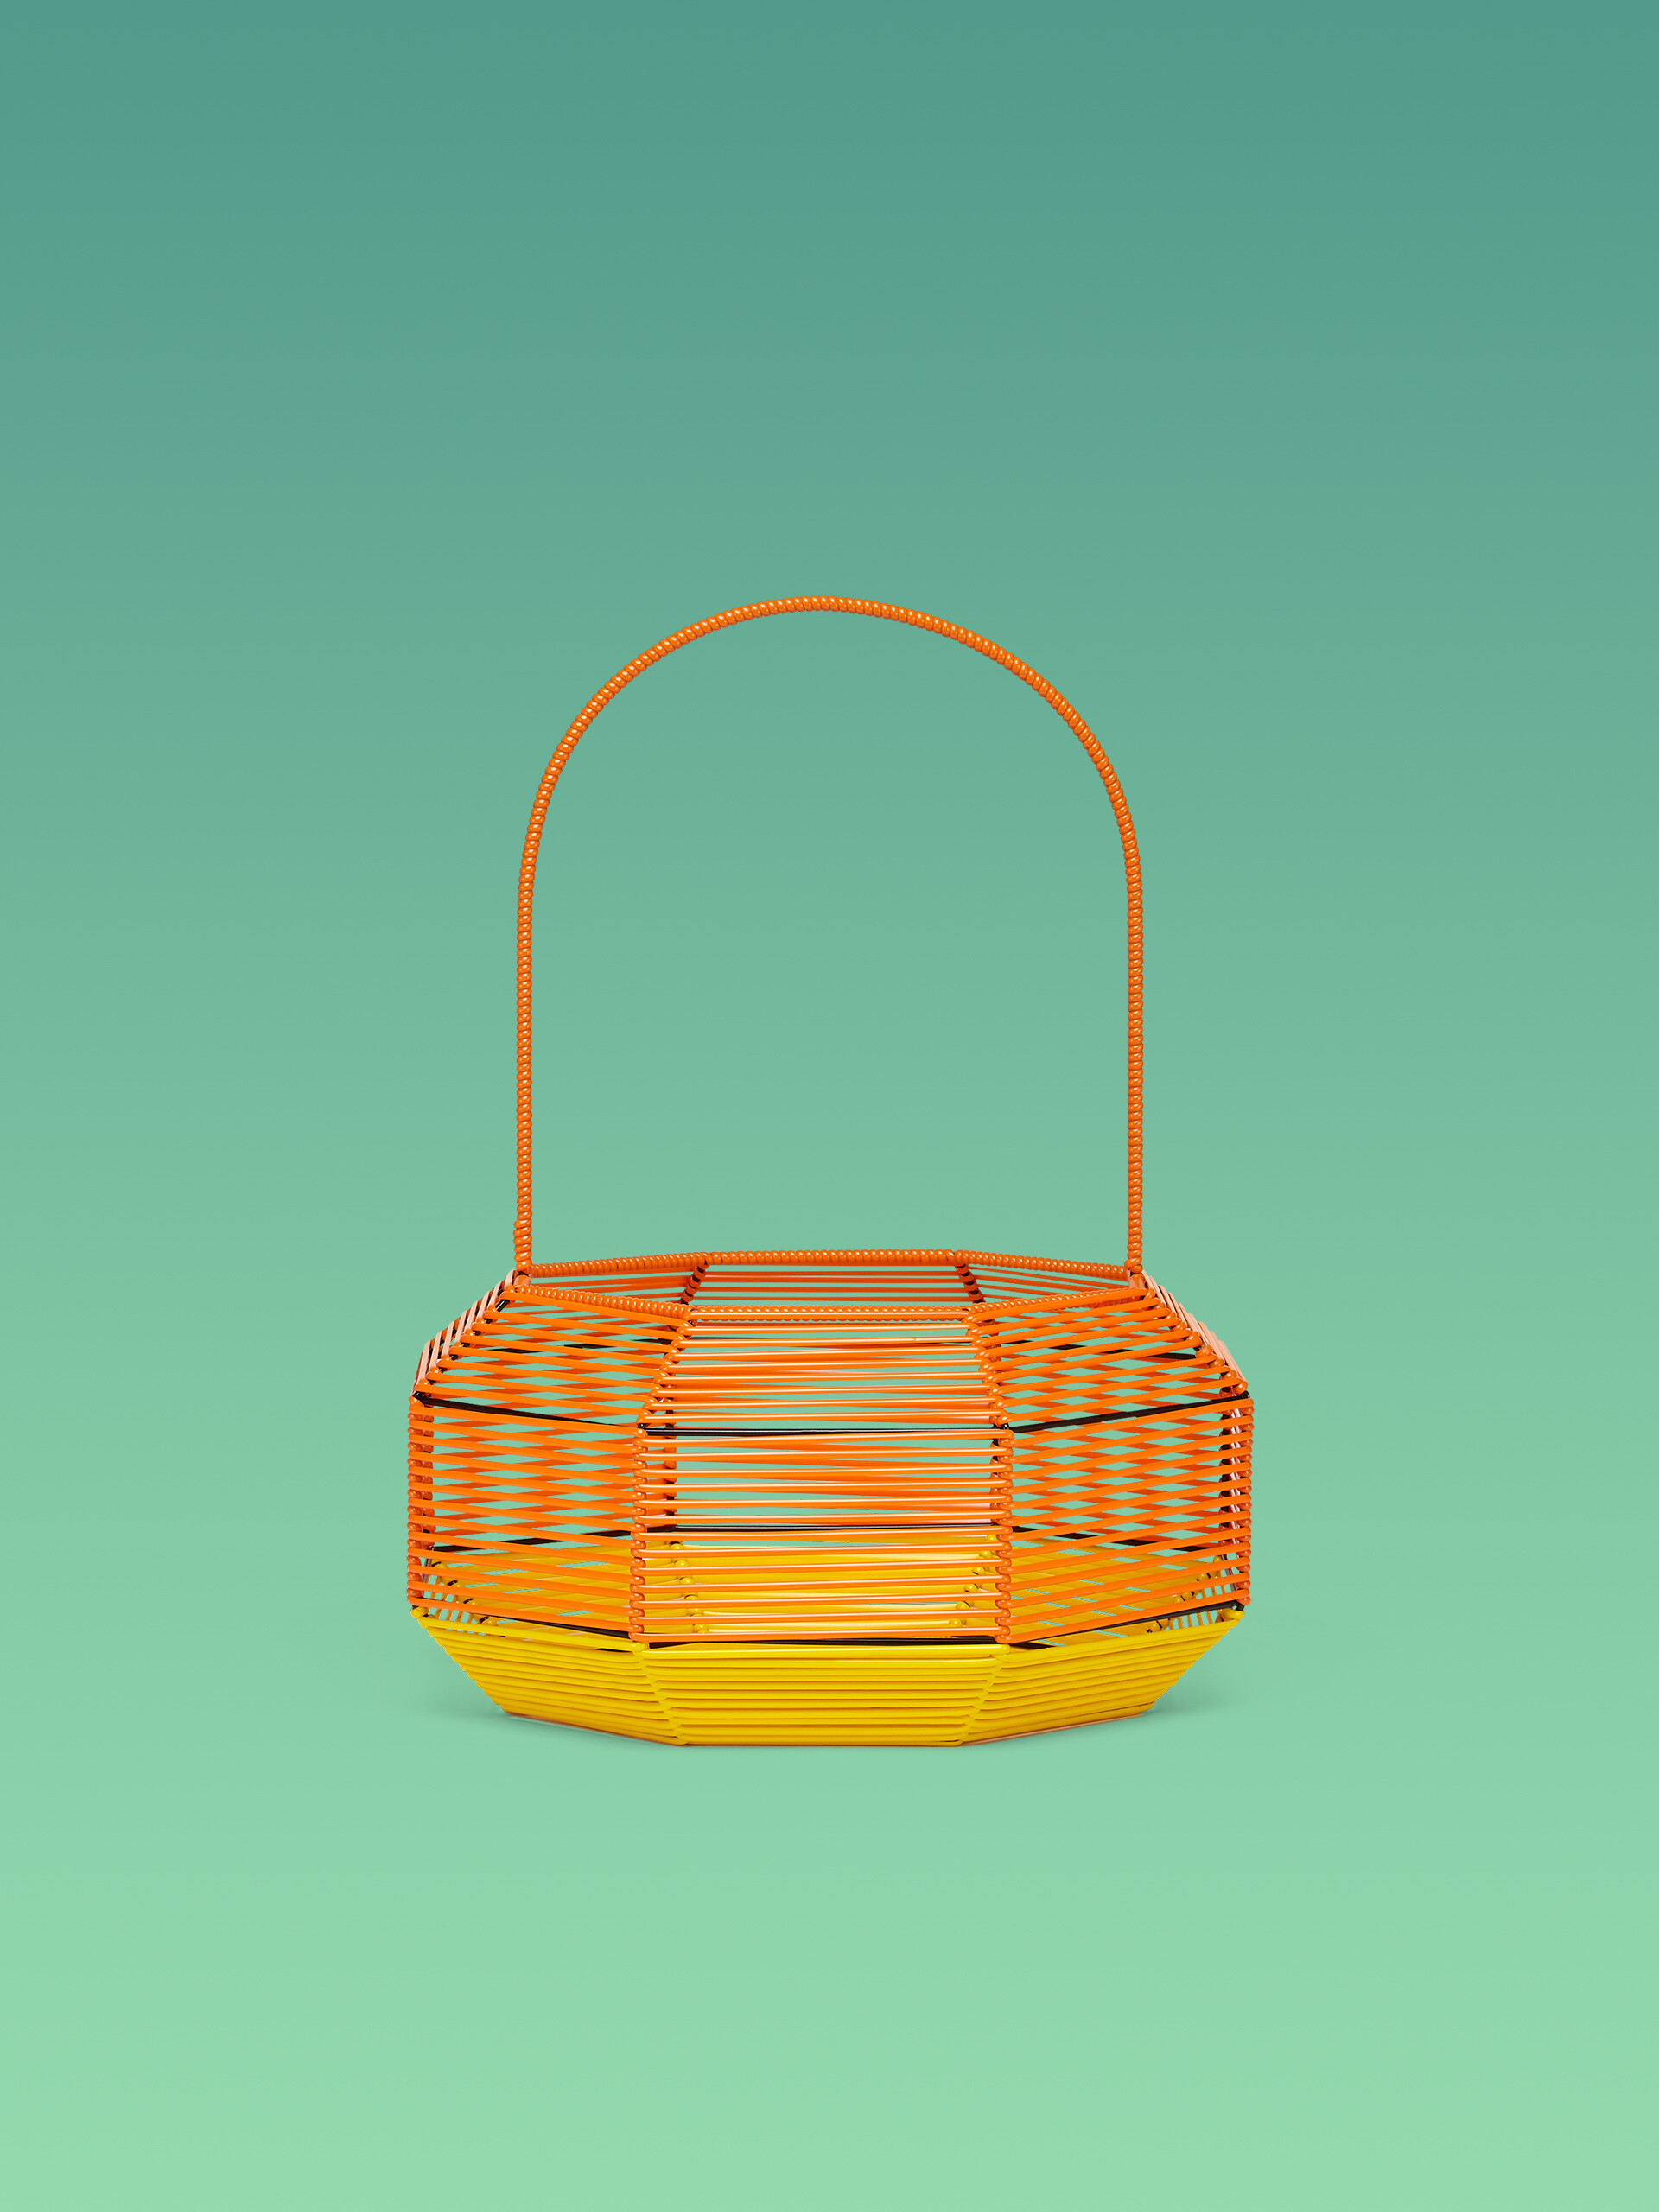 MARNI MARKET octagonal basket - Furniture - Image 1